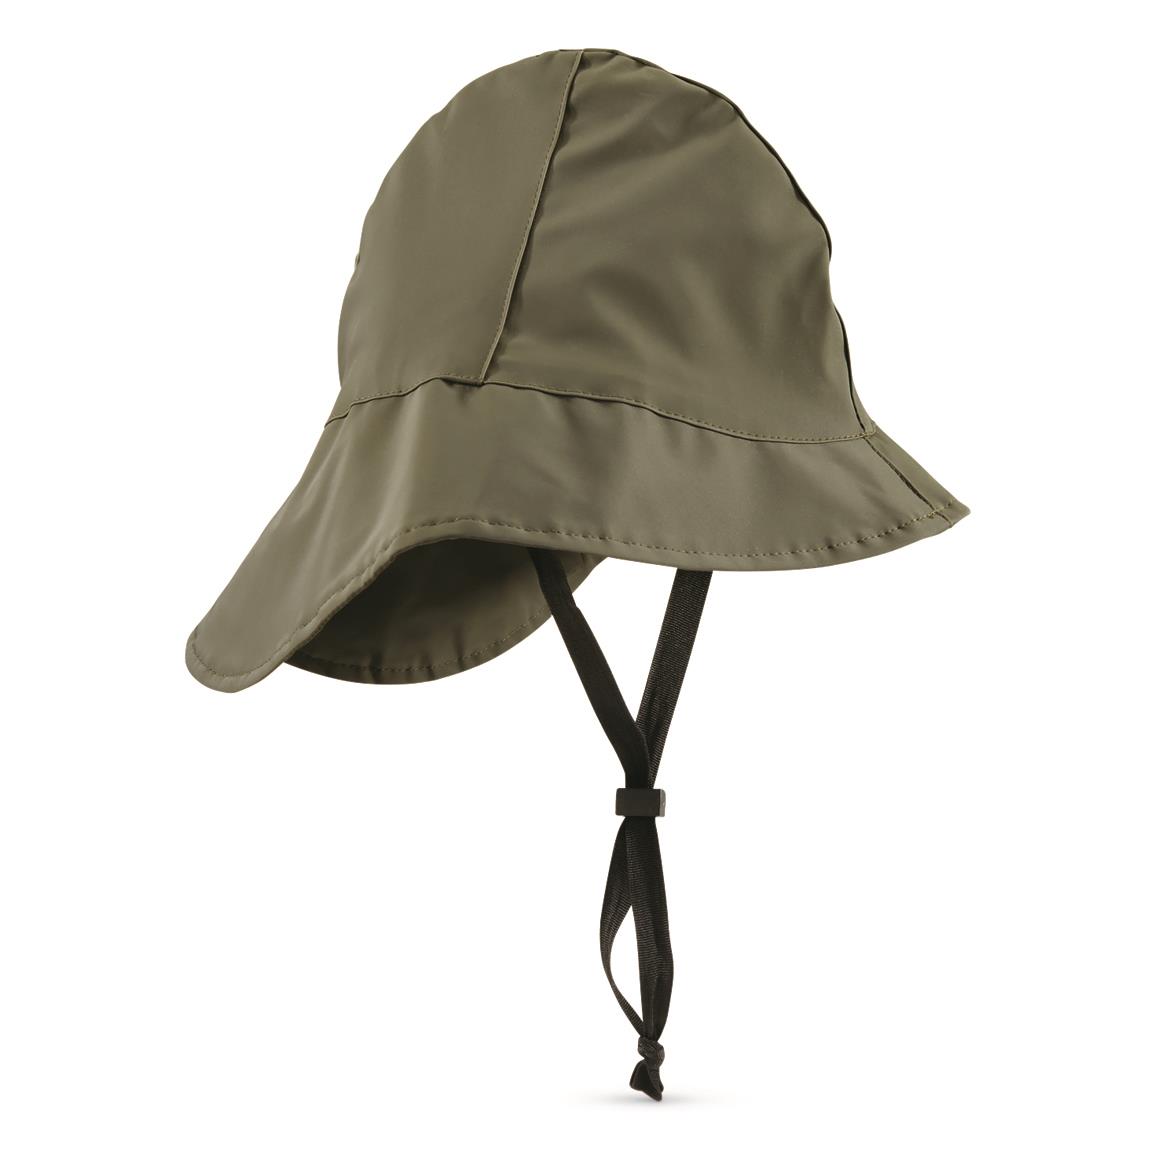 Swedish Military Sou'wester Rain Hat, Reproduction, Olive Drab